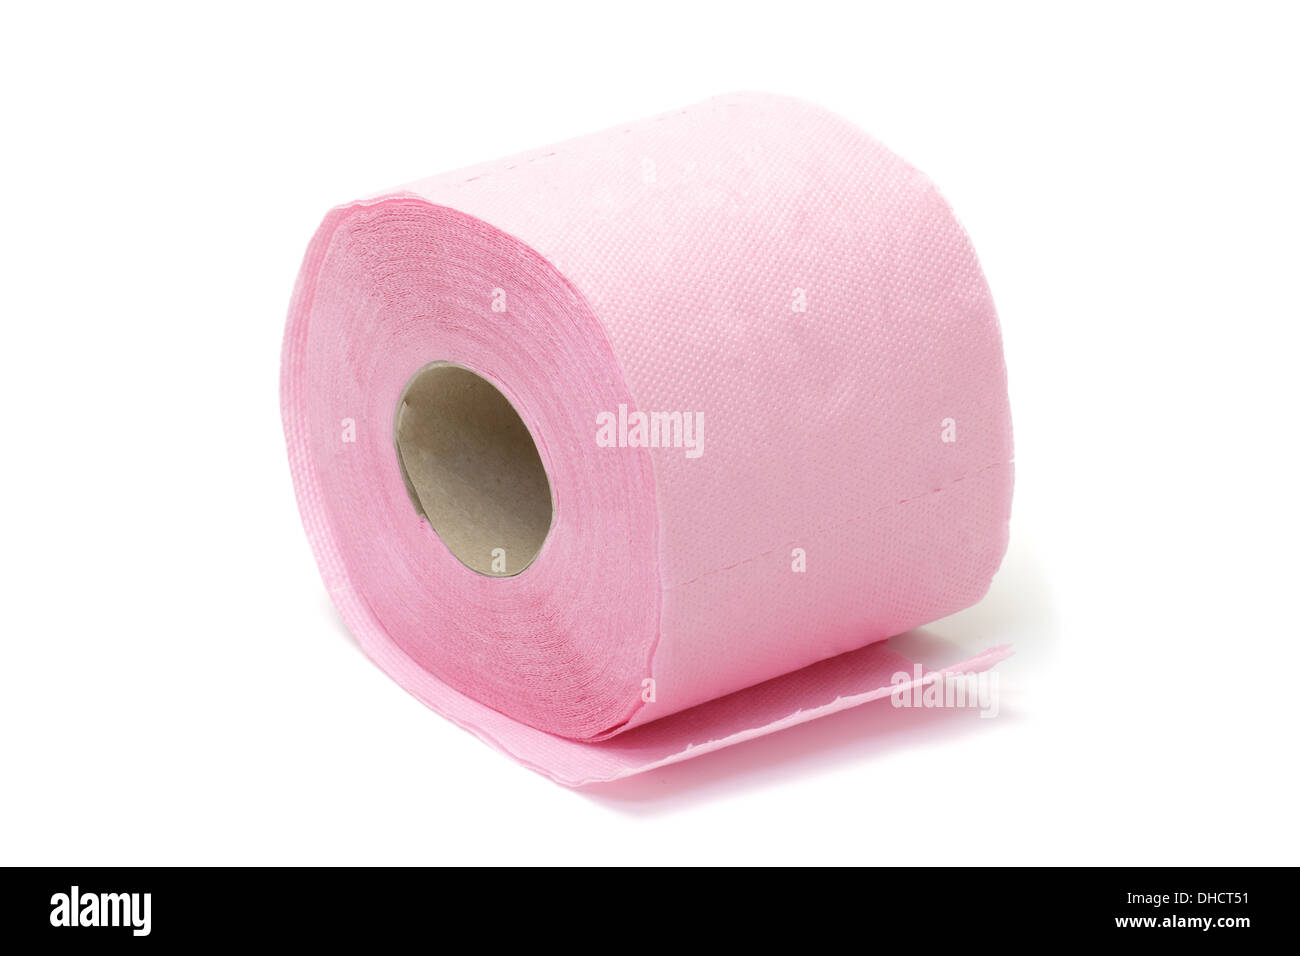 Rosa toilettenpapier -Fotos und -Bildmaterial in hoher Auflösung – Alamy